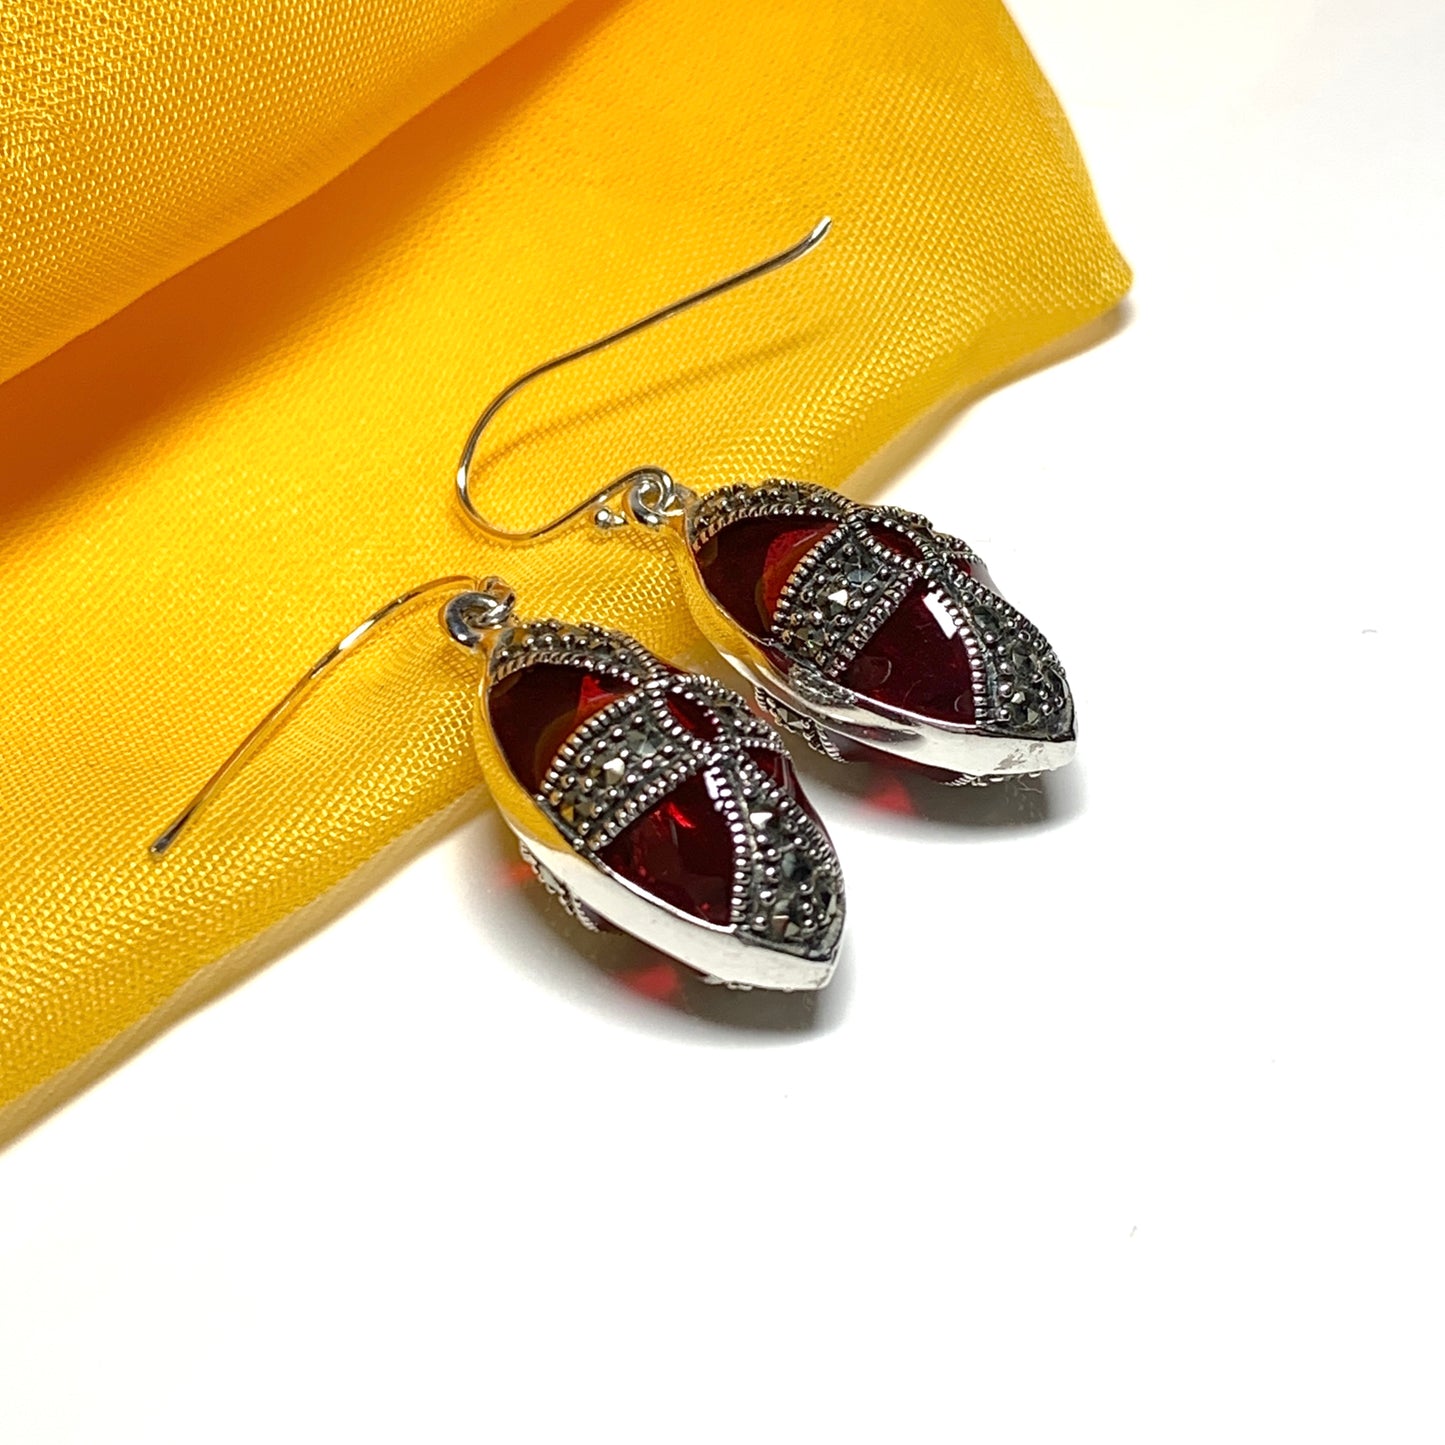 Large red crystal and marcasite teardrop pear drop earrings